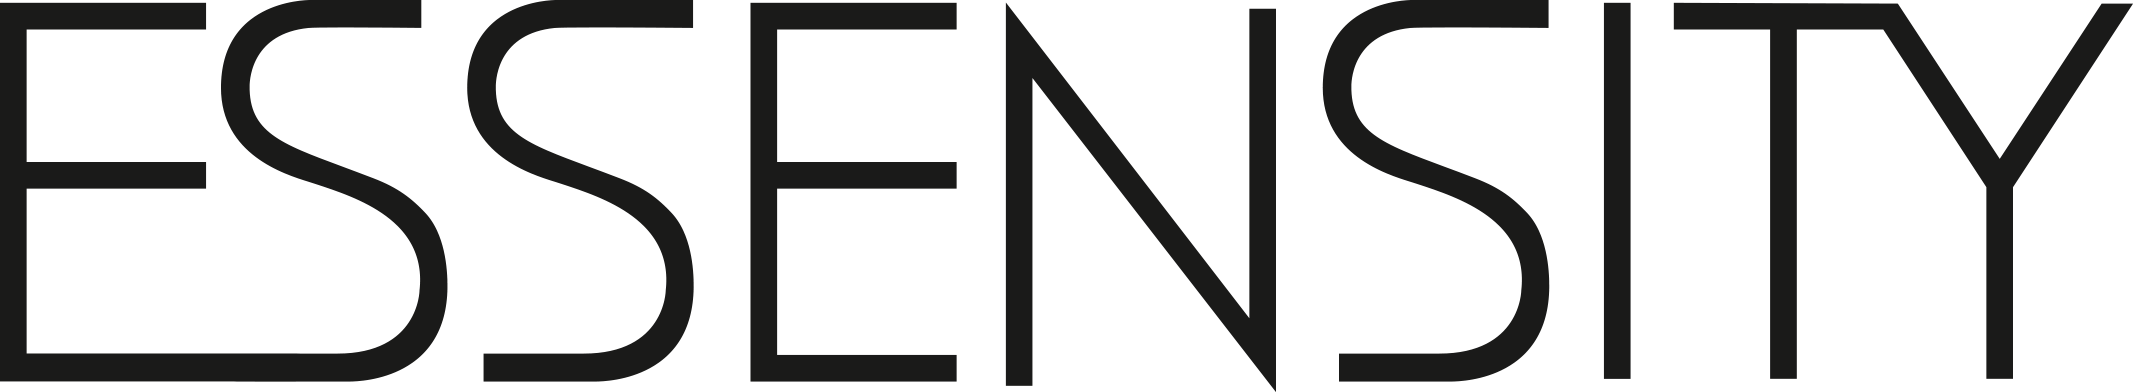 Essensity-Logo.png#asset:5665